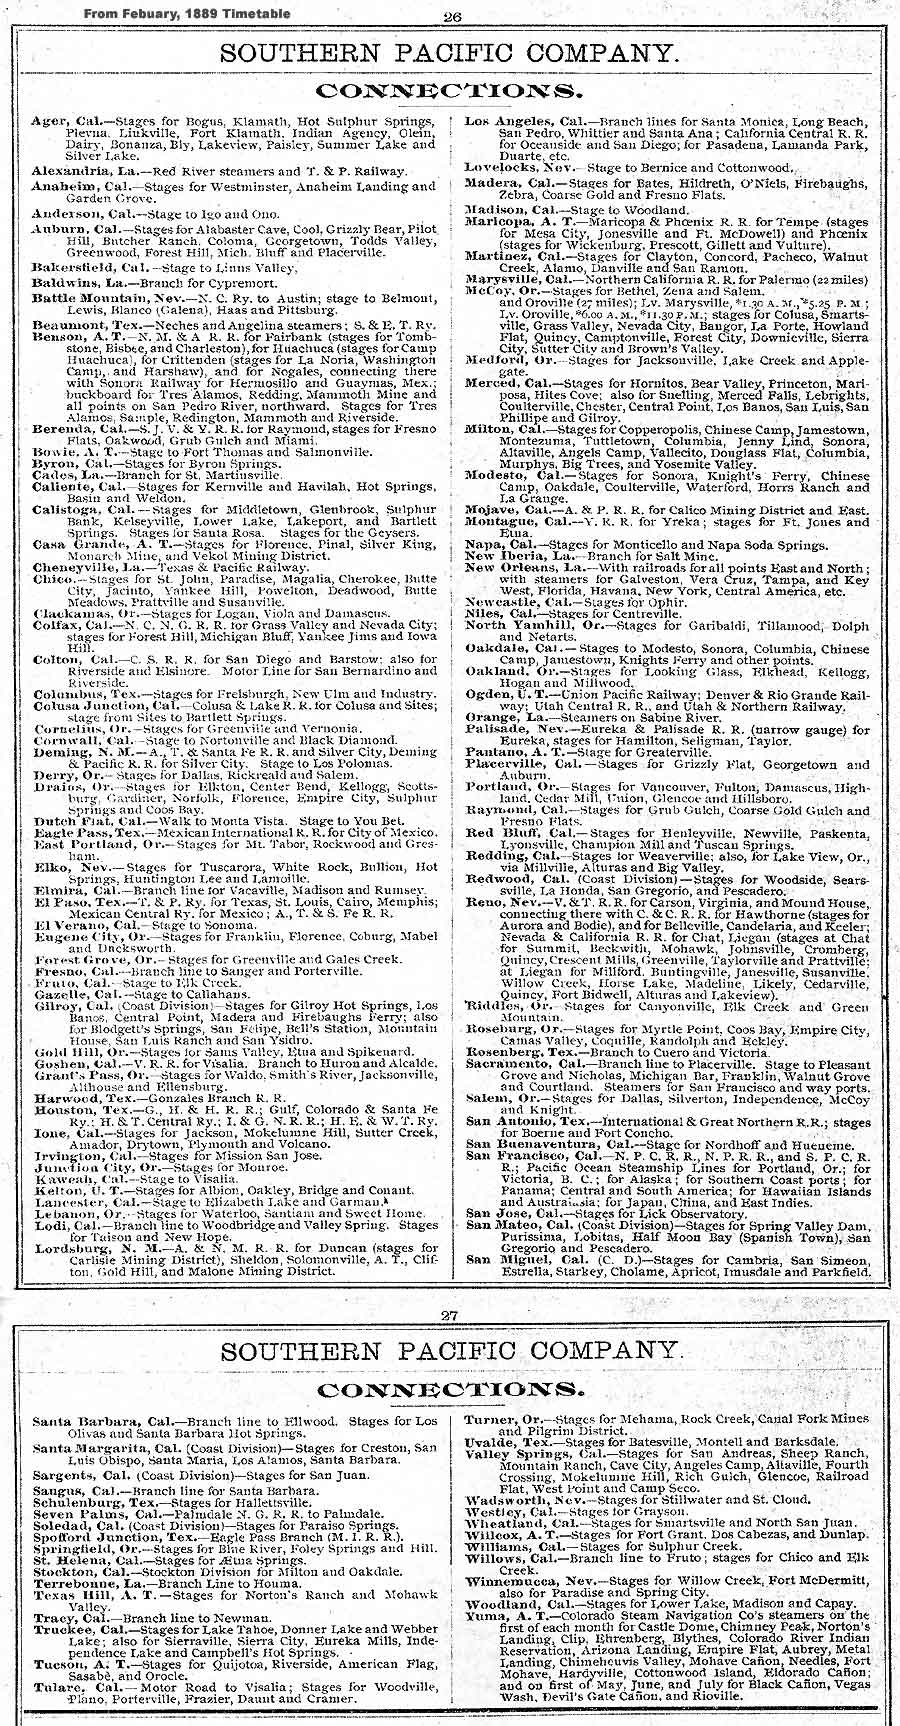 Union Pacific Iowa Area Employee Timetable #3 DEC 17 2007 UPRR ETT REPRINT 